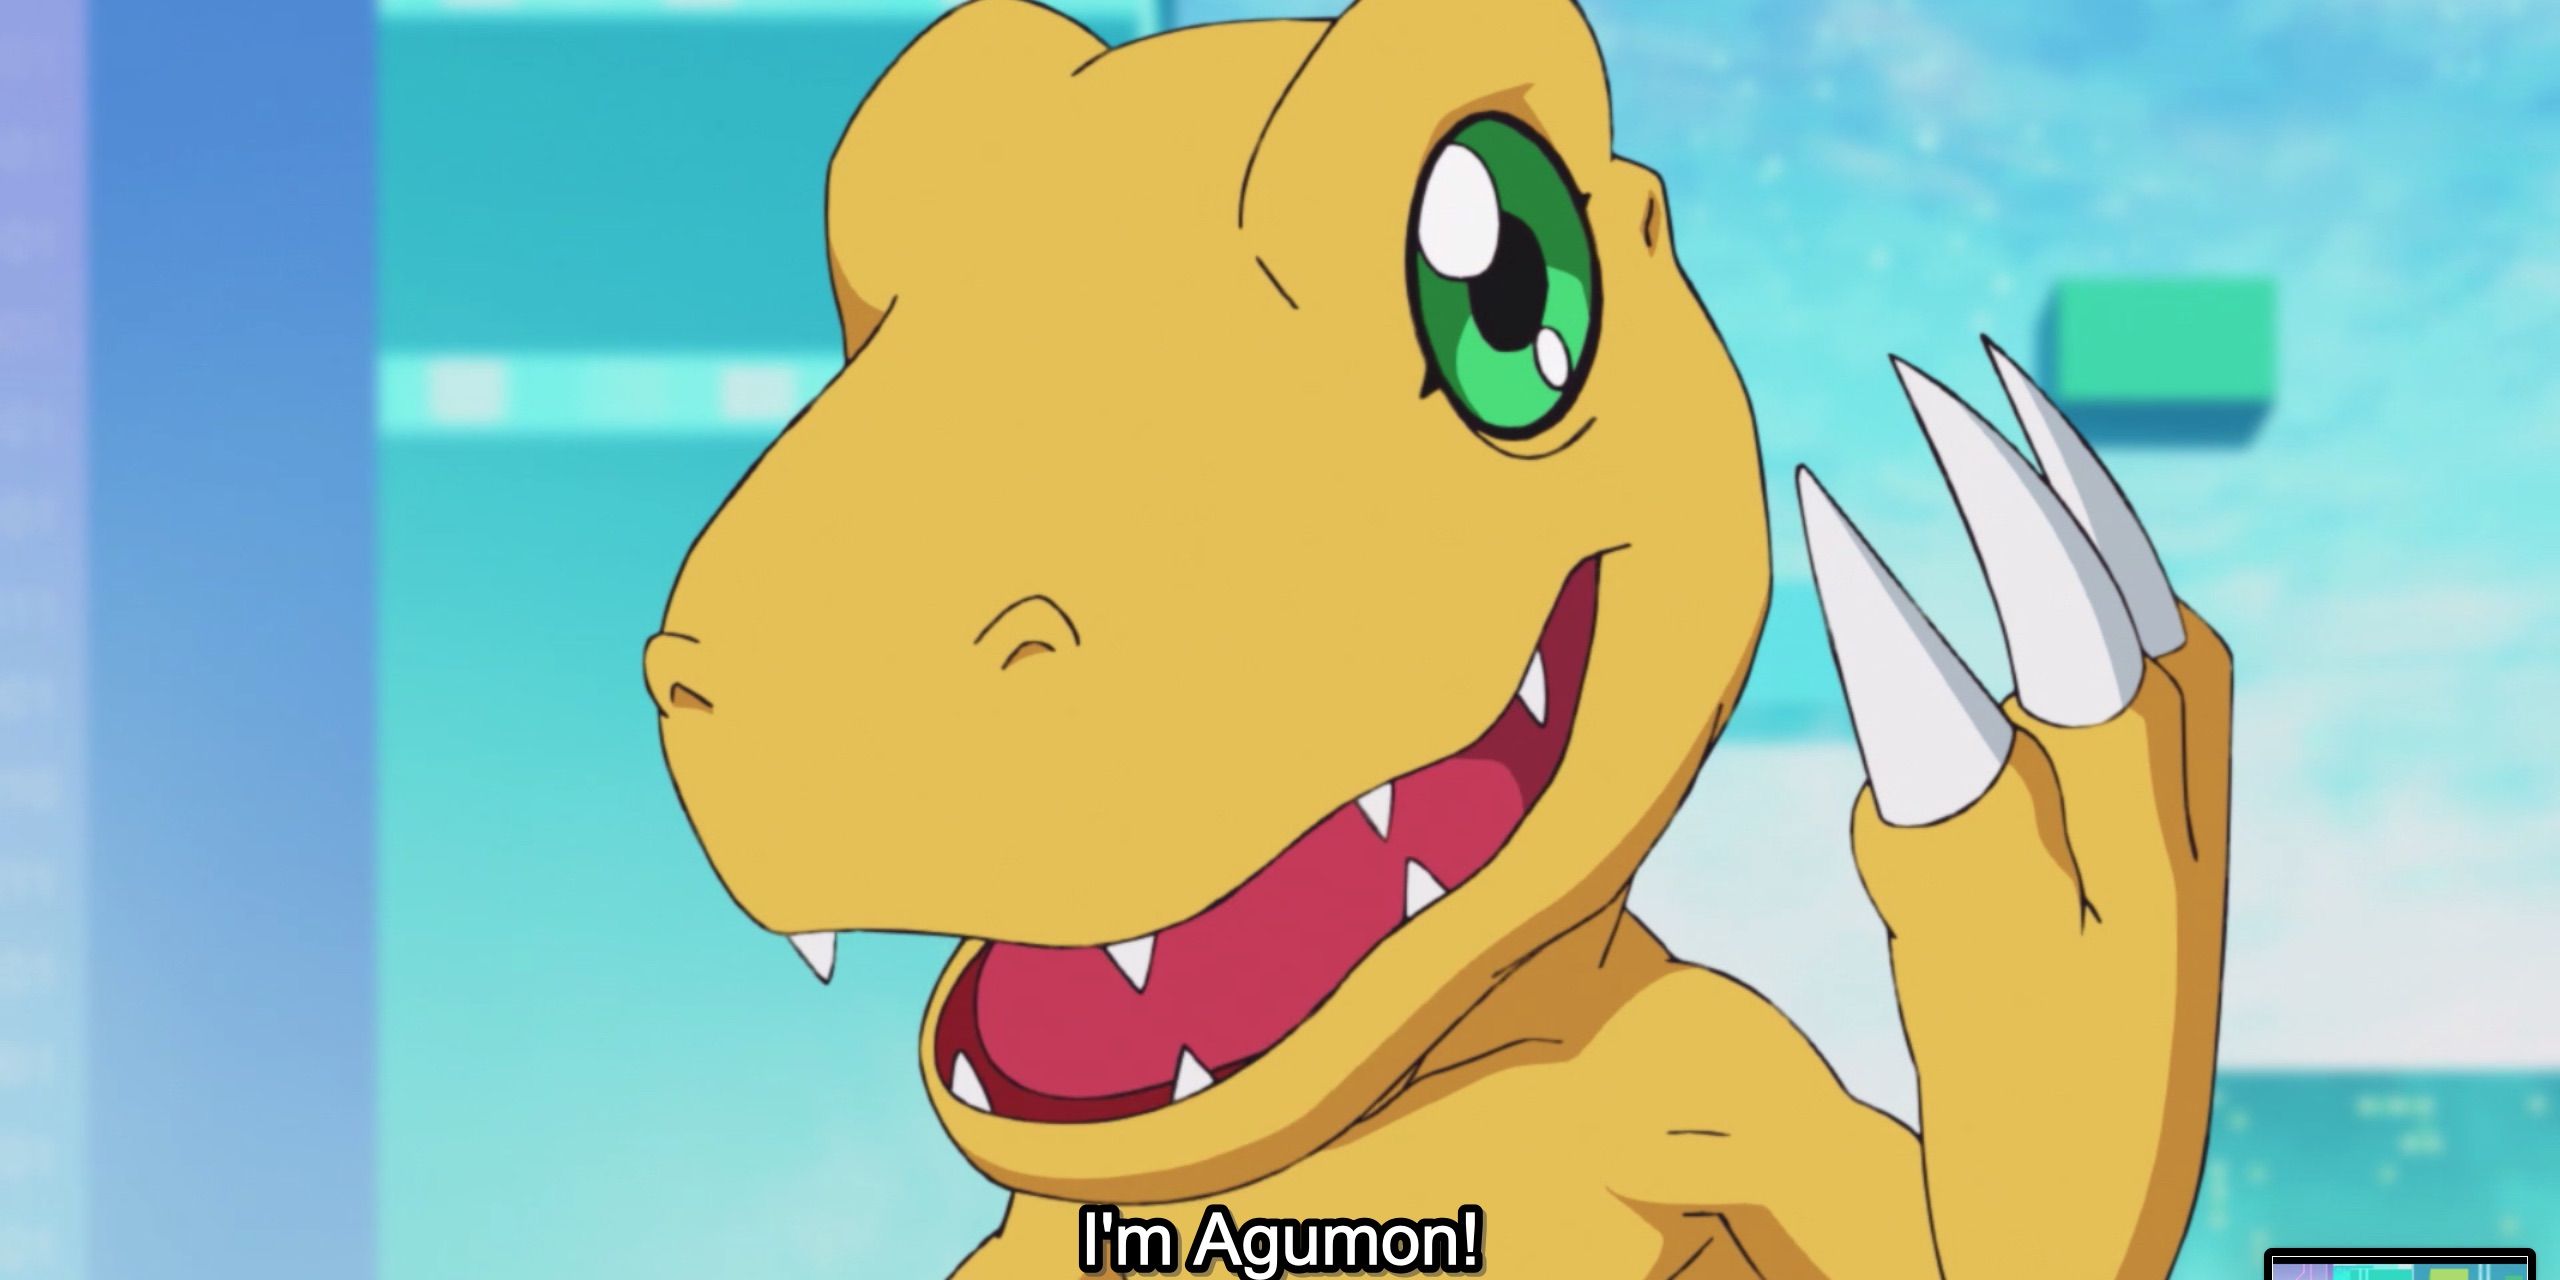 Pokémon Vs Digimon Is Pikachu or Agumon the Better Partner